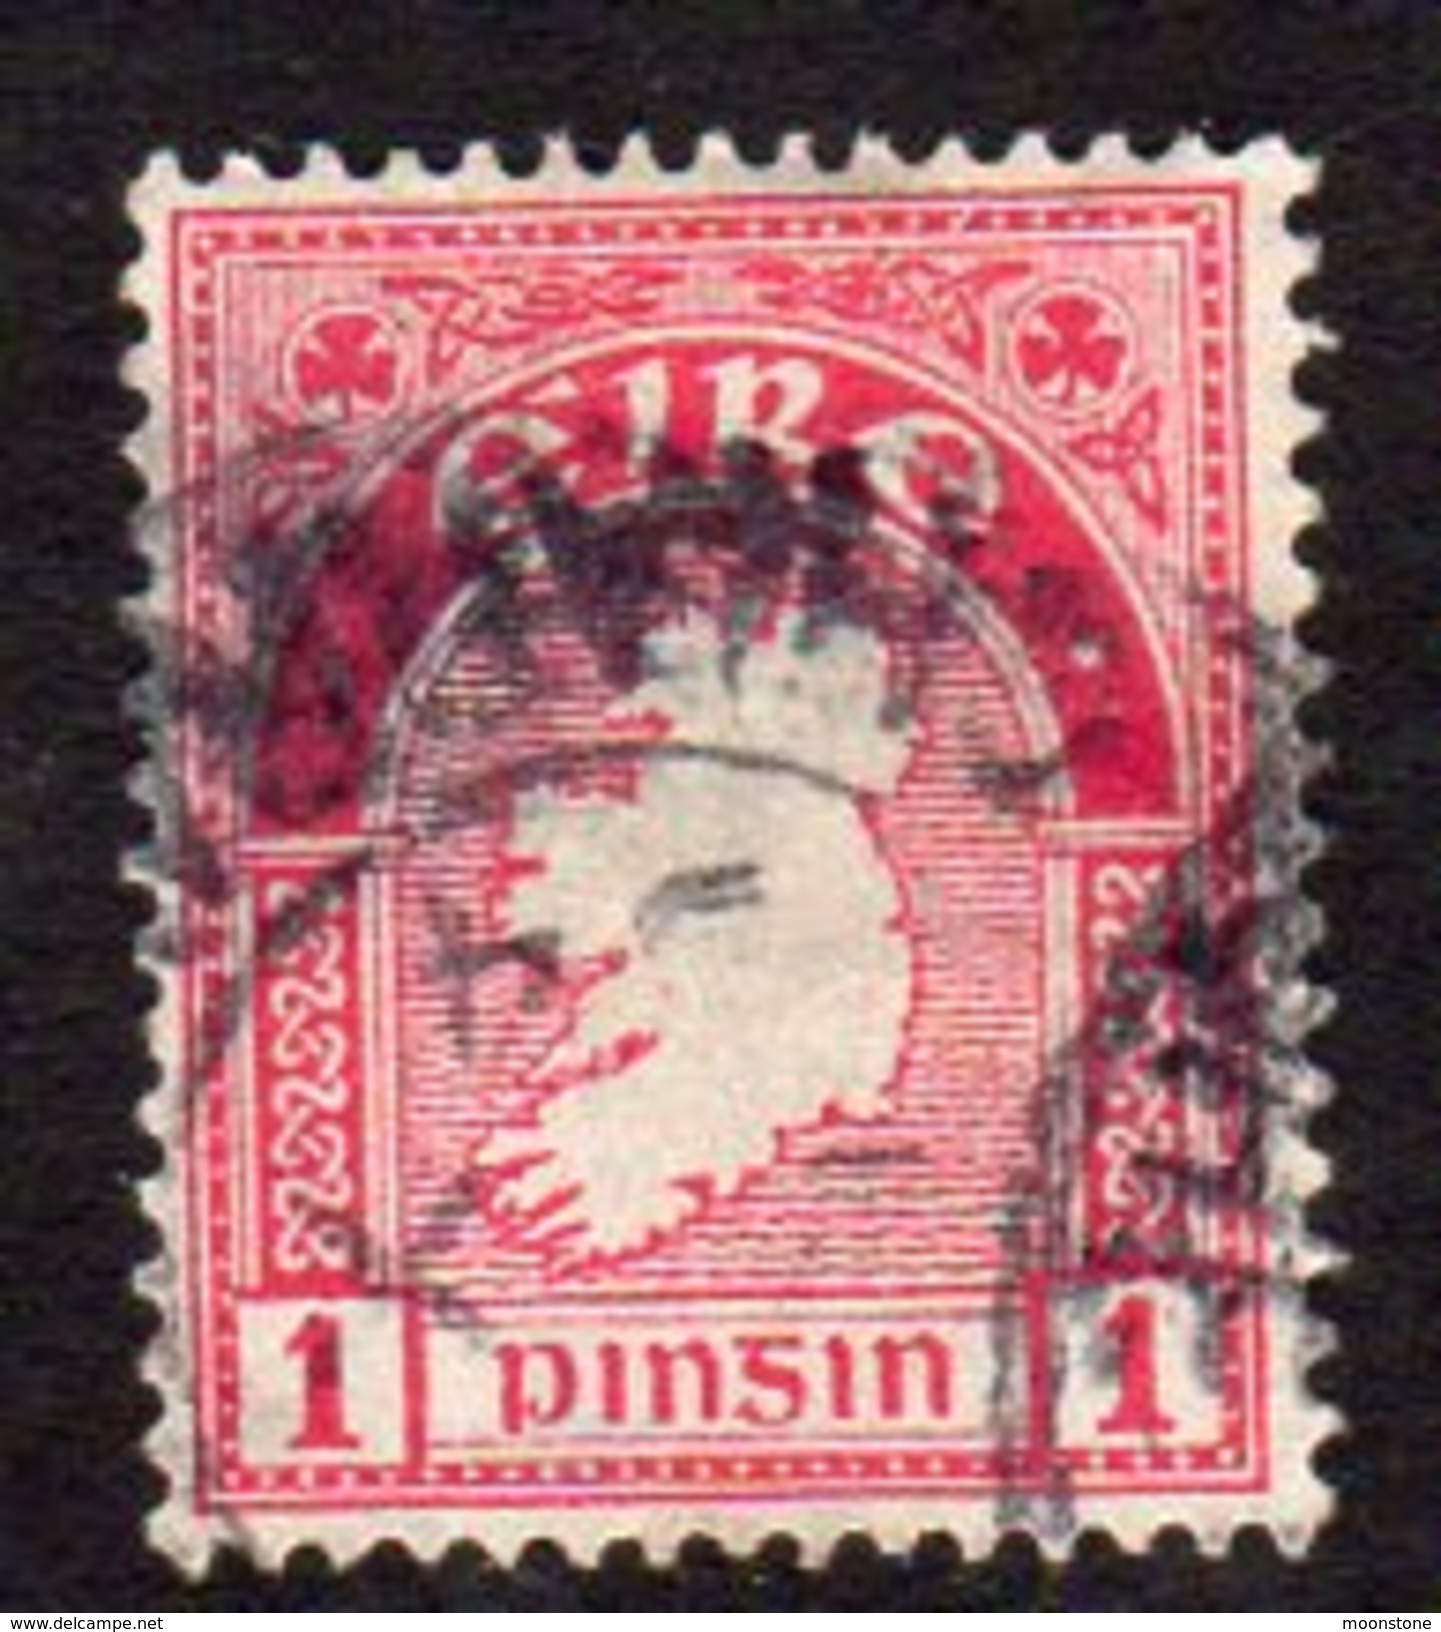 Ireland 1922-34 1d Definitive, Wmk. SE, Used, SG 72 - Unused Stamps